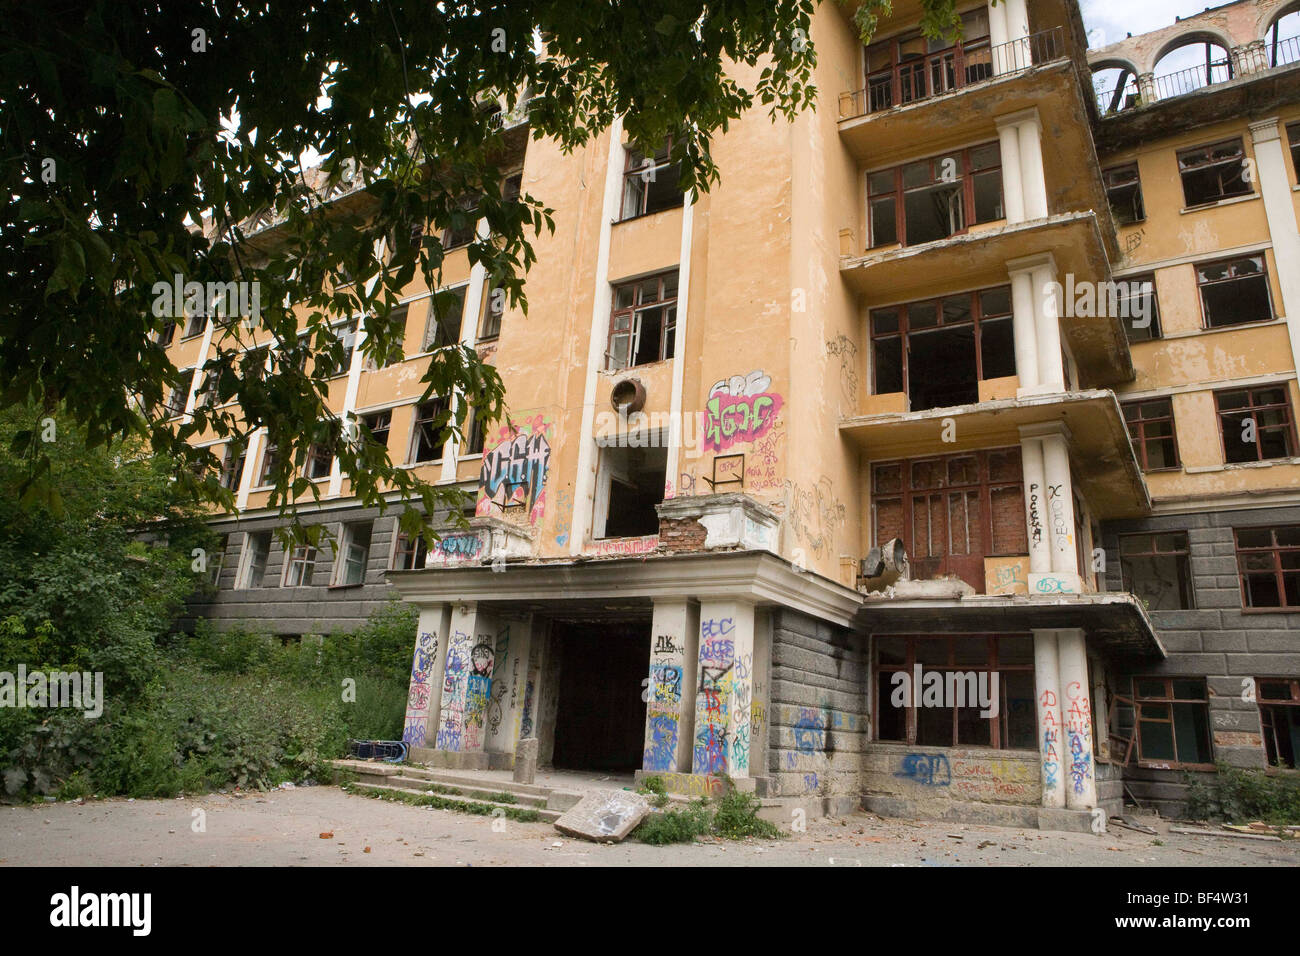 Abandoned hospital with graffiti on walls, Ekaterinberg, Russia Stock Photo